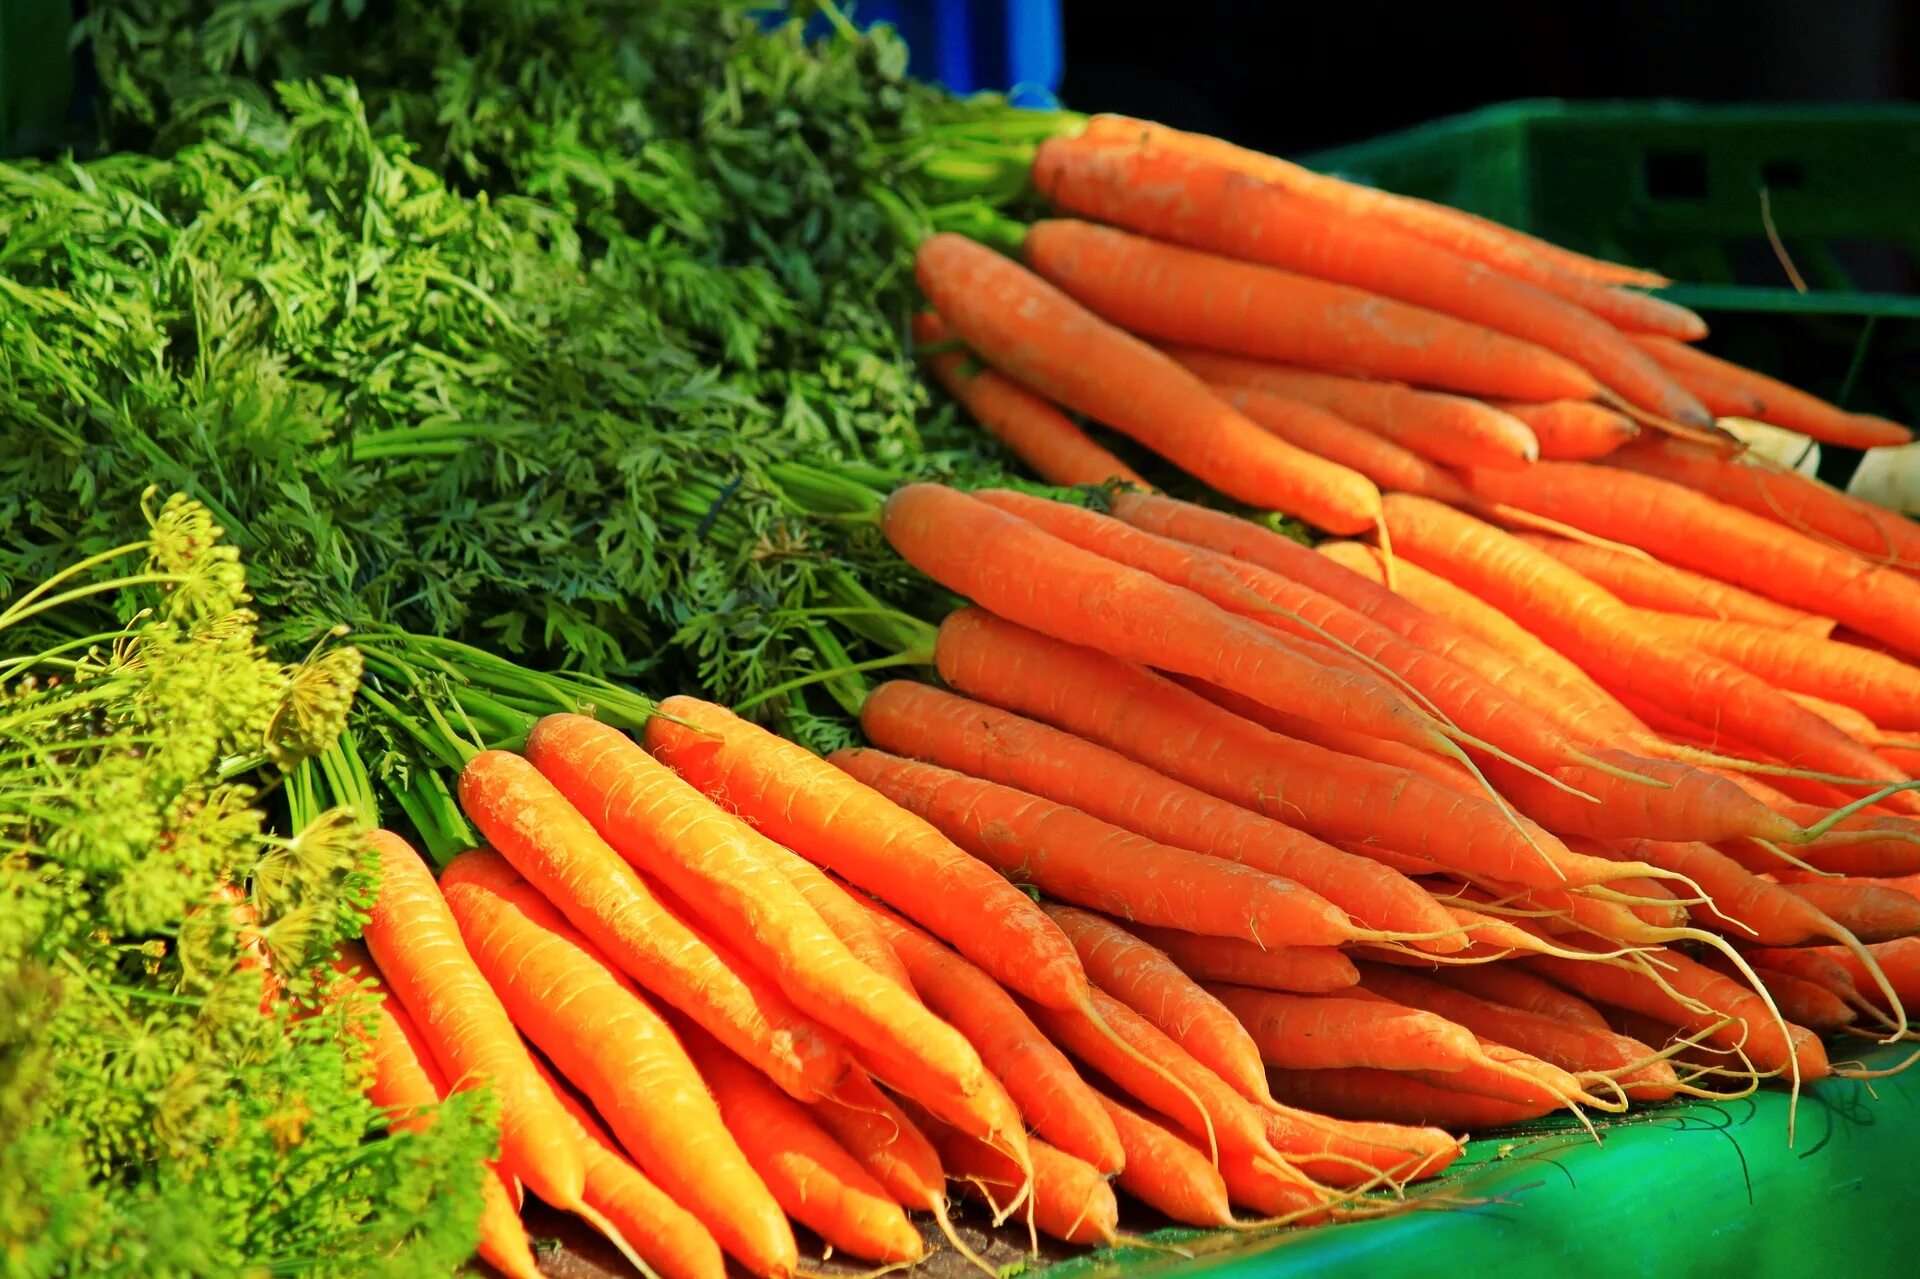 Carrot vegetable. Морковь. Красивая морковь. Морковь полезный овощ. Сырая морковь.